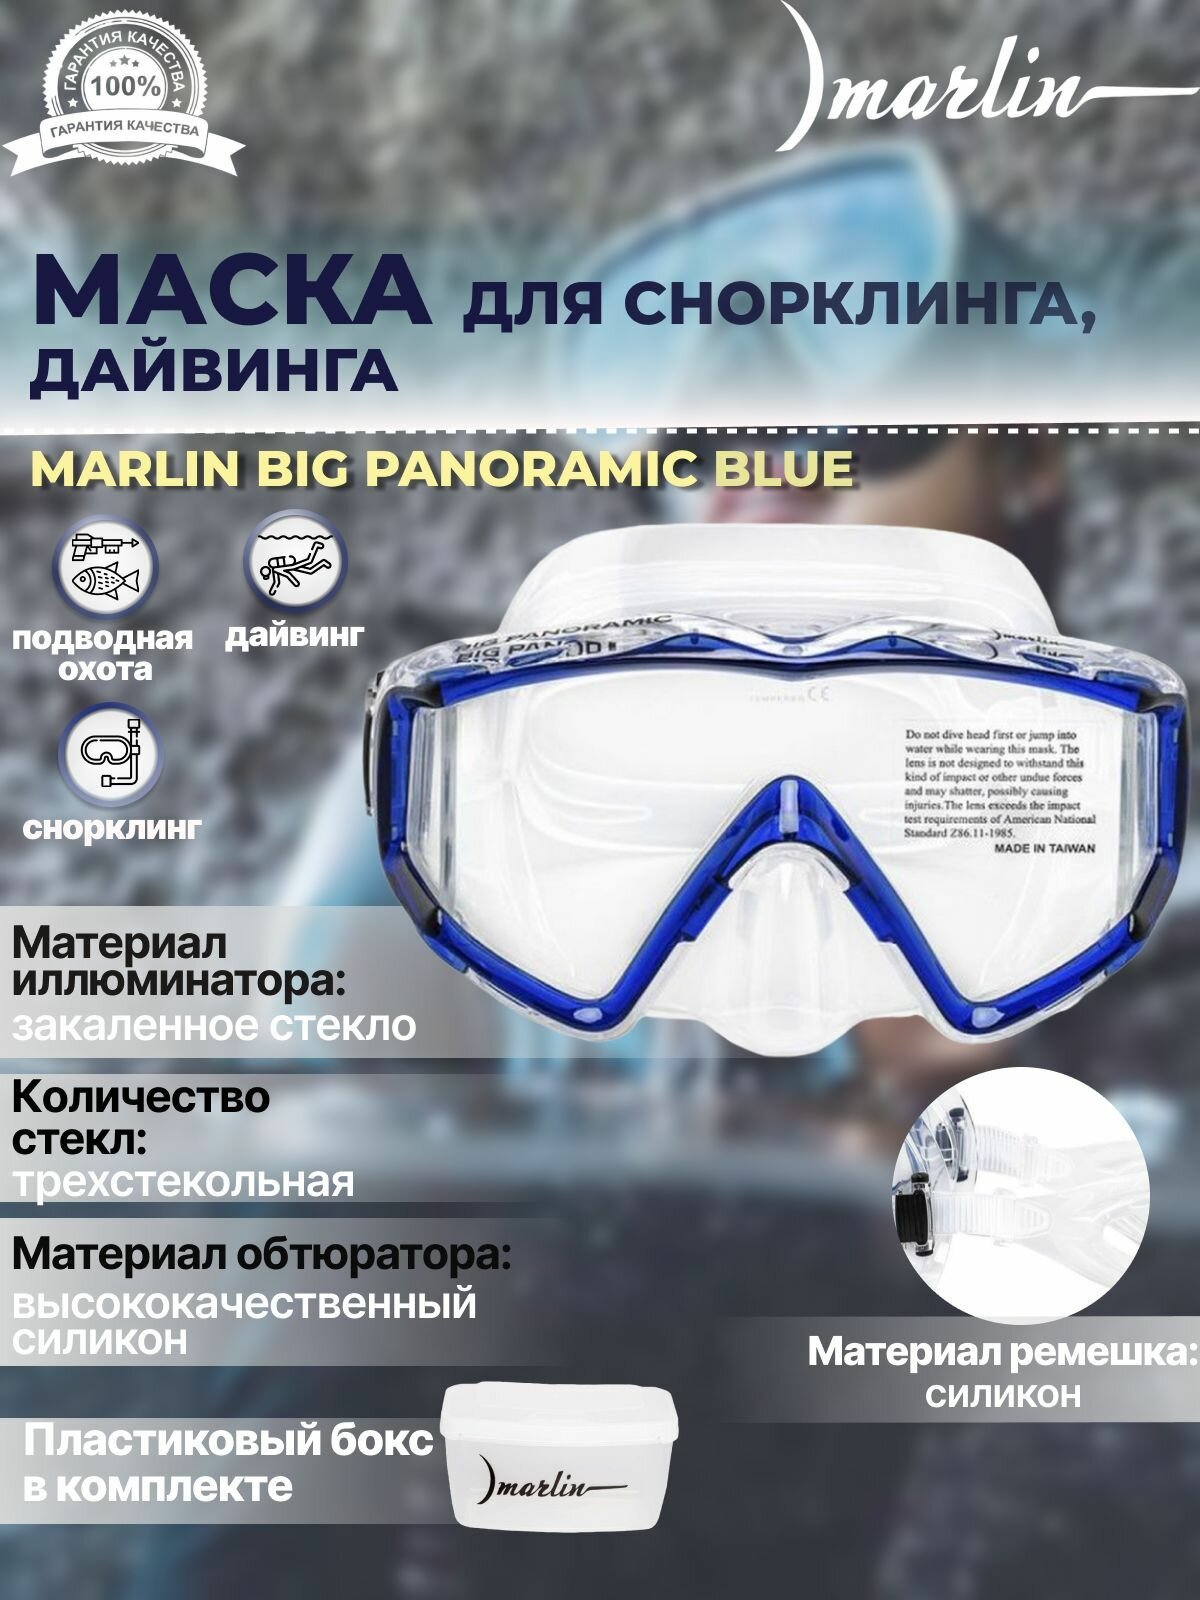 Маска для плавания MARLIN BIG PANORAMIC blue